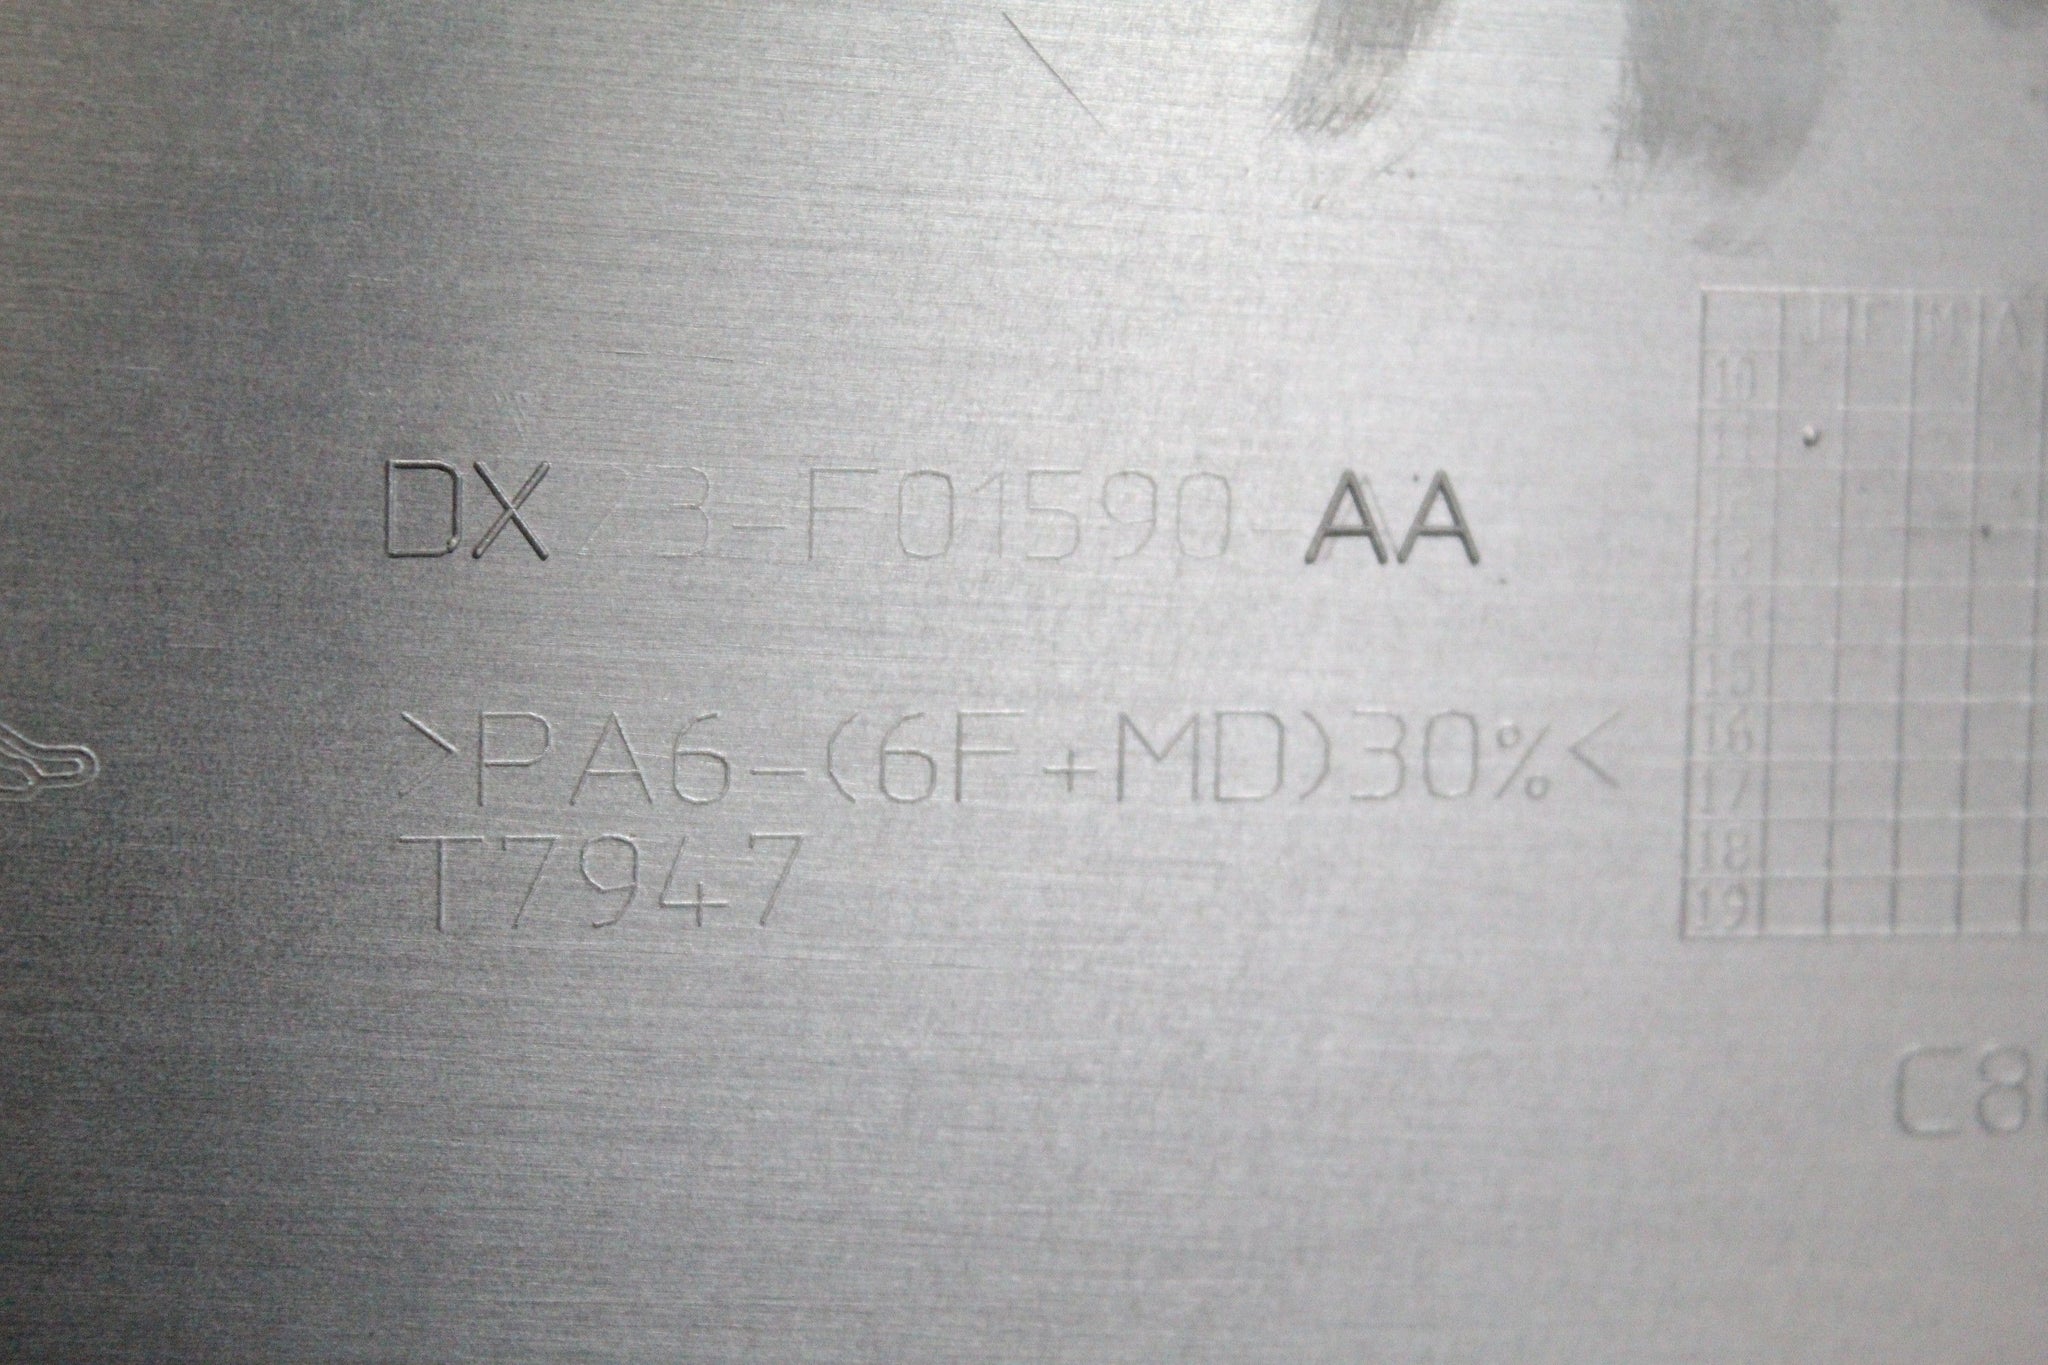 JAGUAR XF 3.0 ENGINE FUSE BOX COVER PANEL TRIM 2013 DX23-F01590-AA